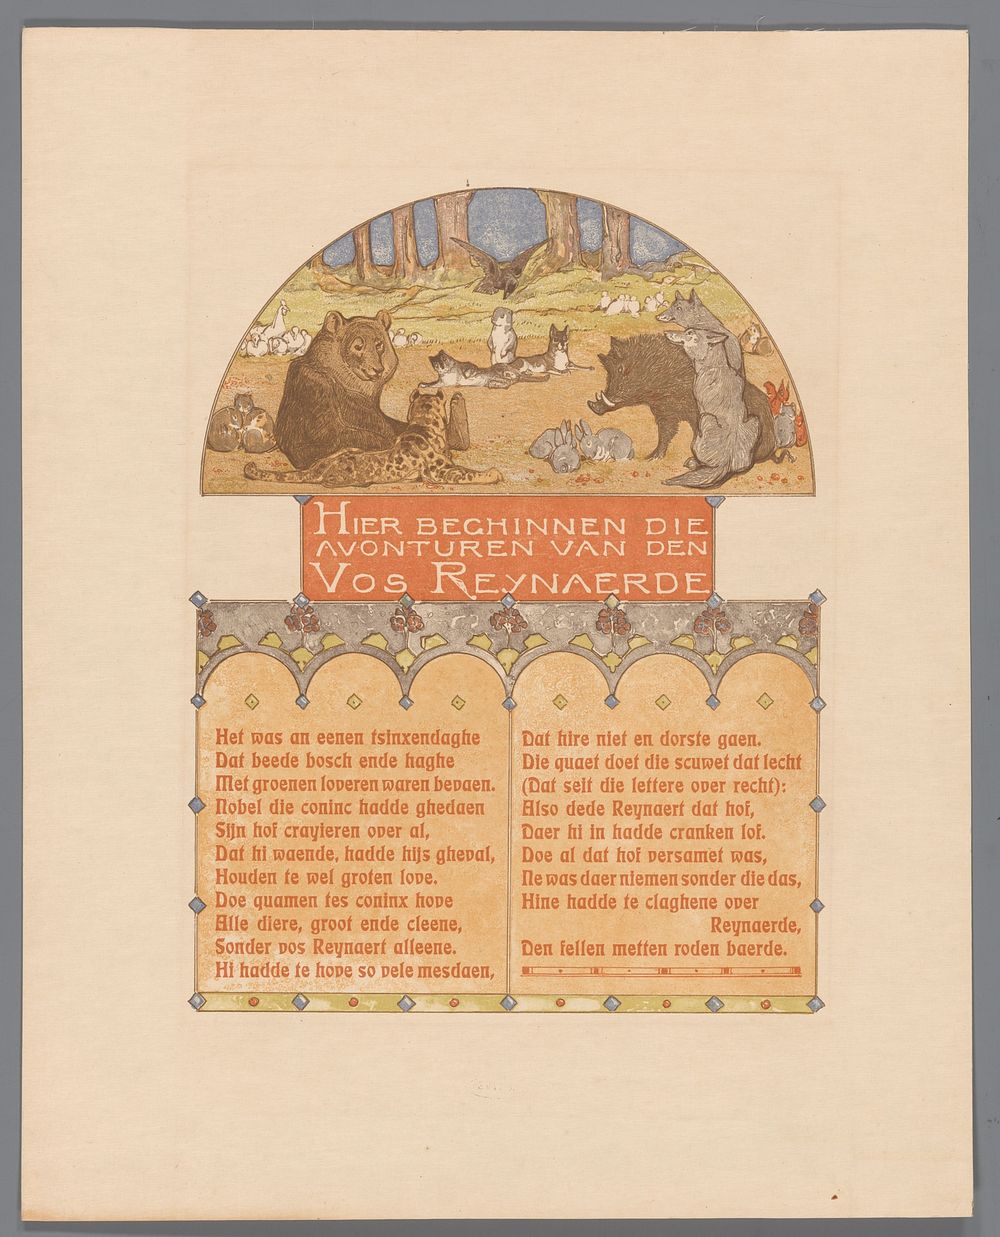 Groep dieren uit Reinaert de Vos (1910) by Bernard Willem Wierink